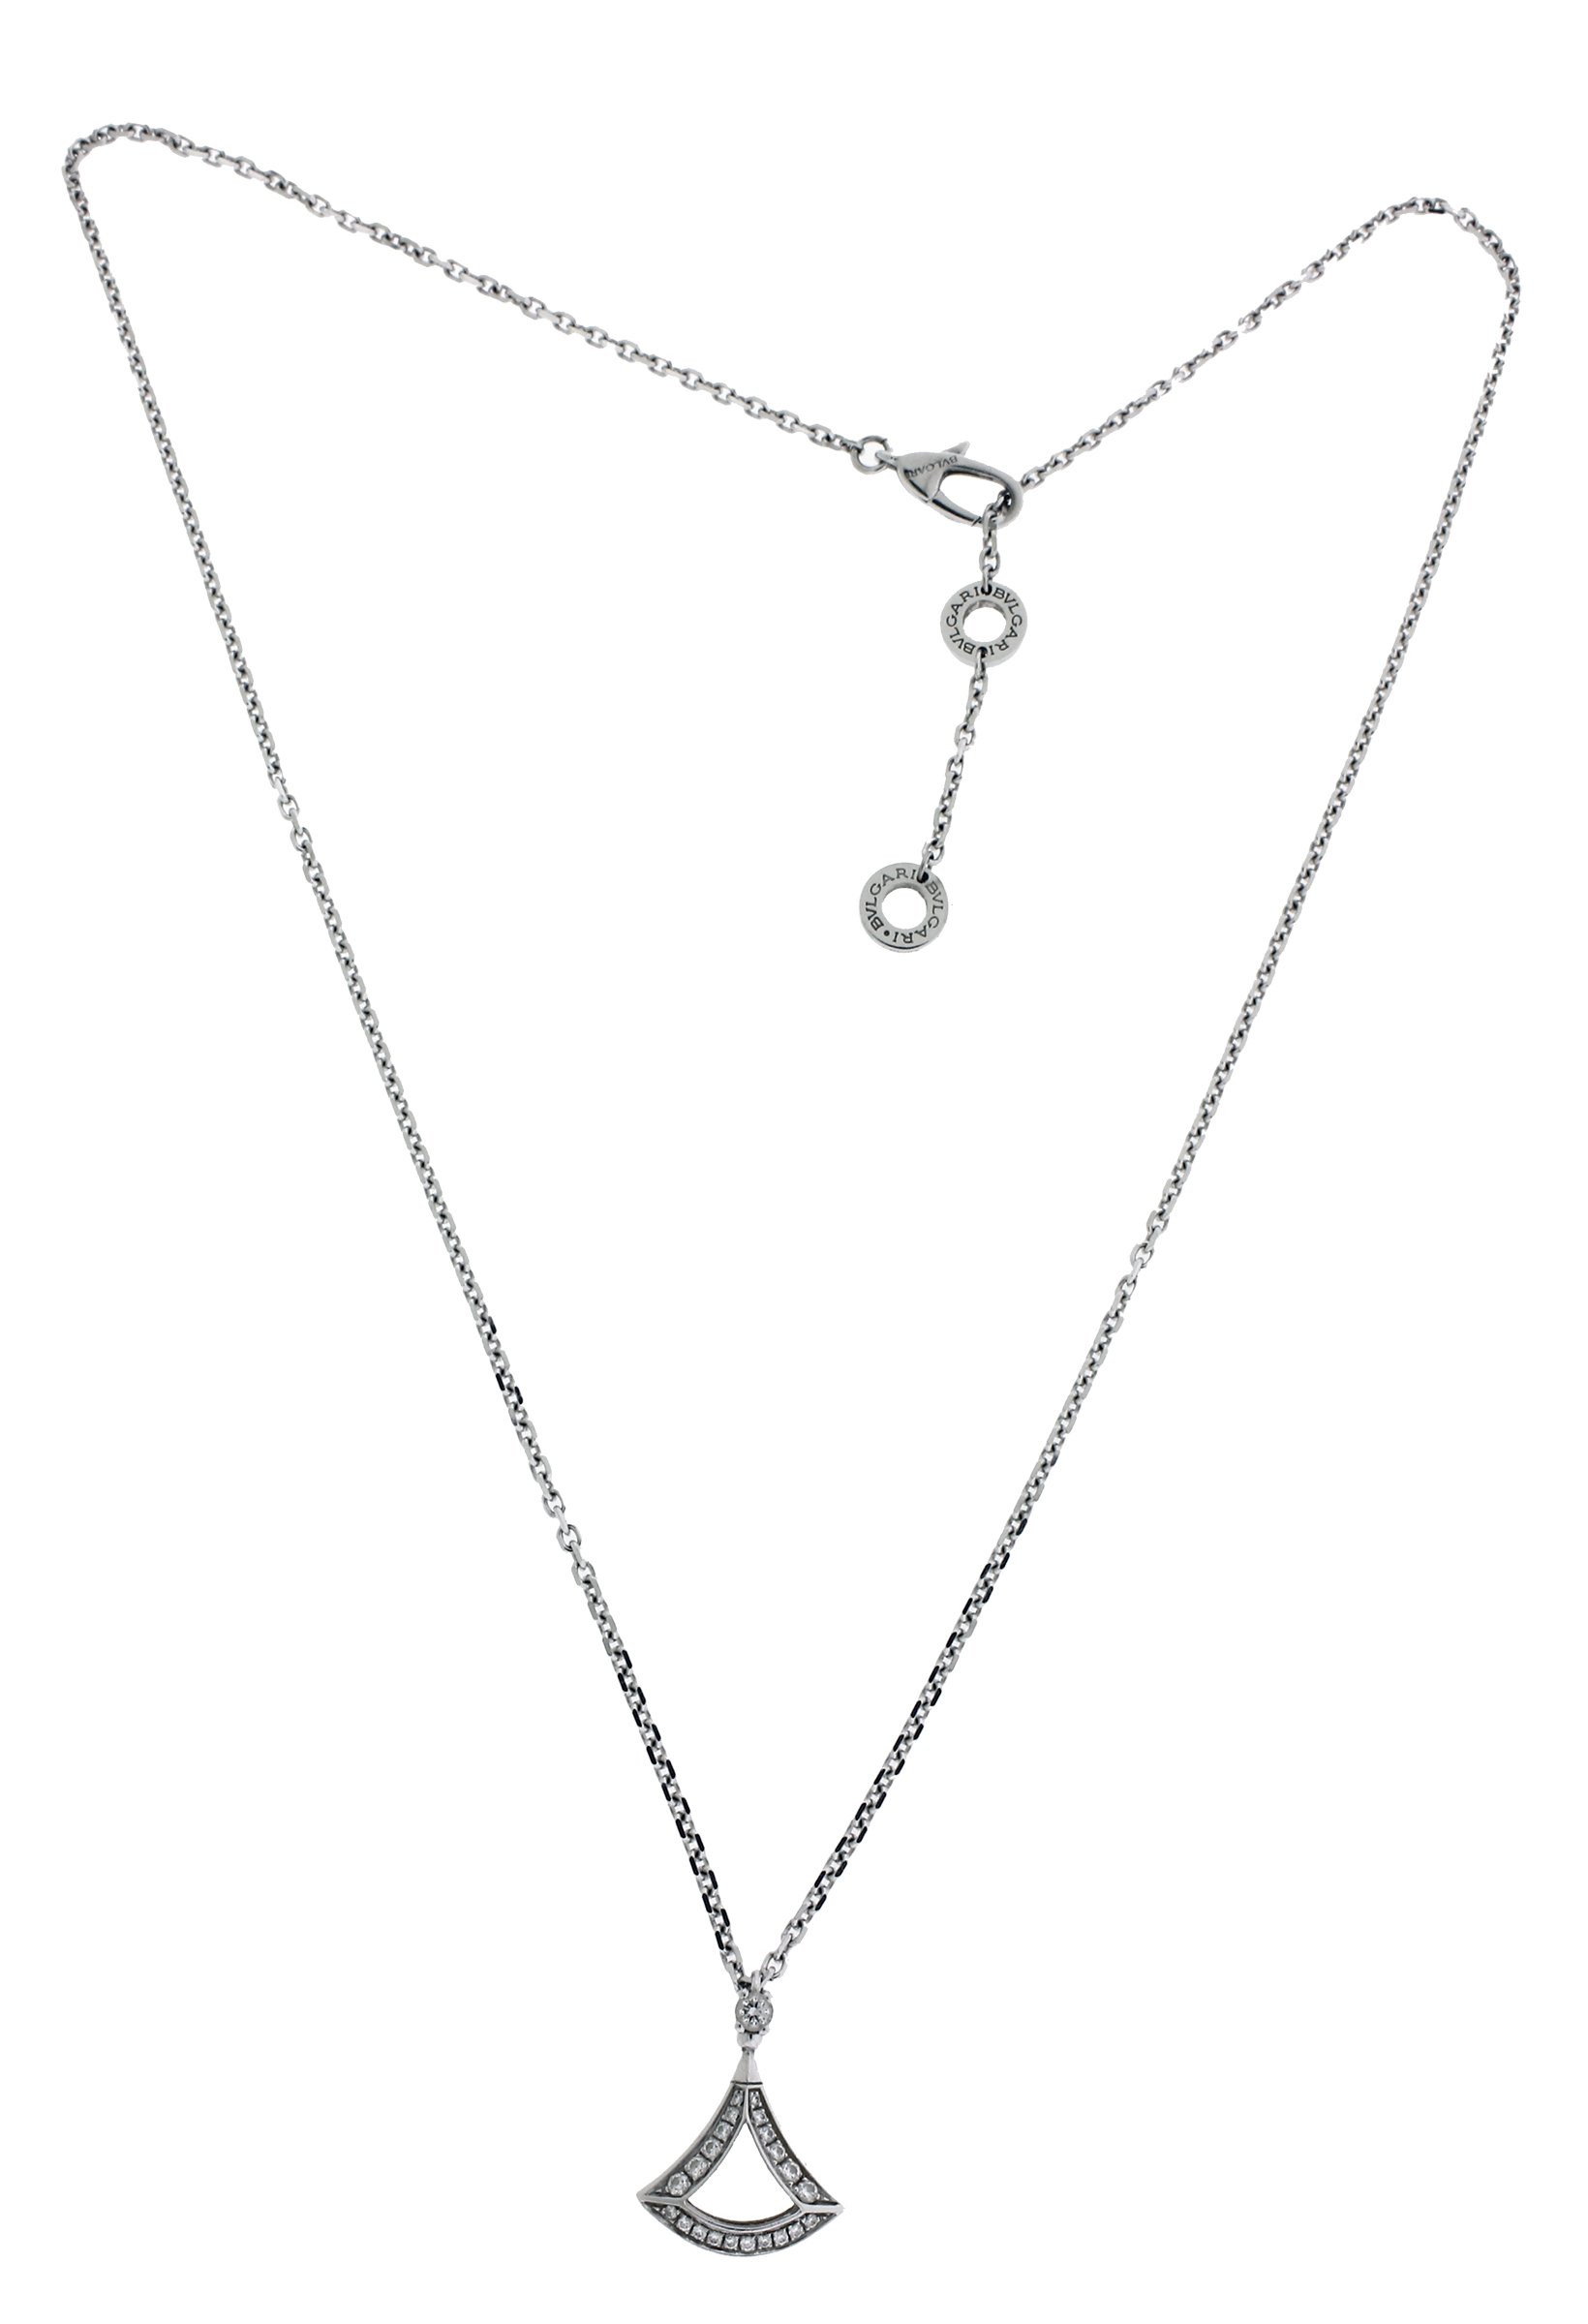 bvlgari necklace 18k